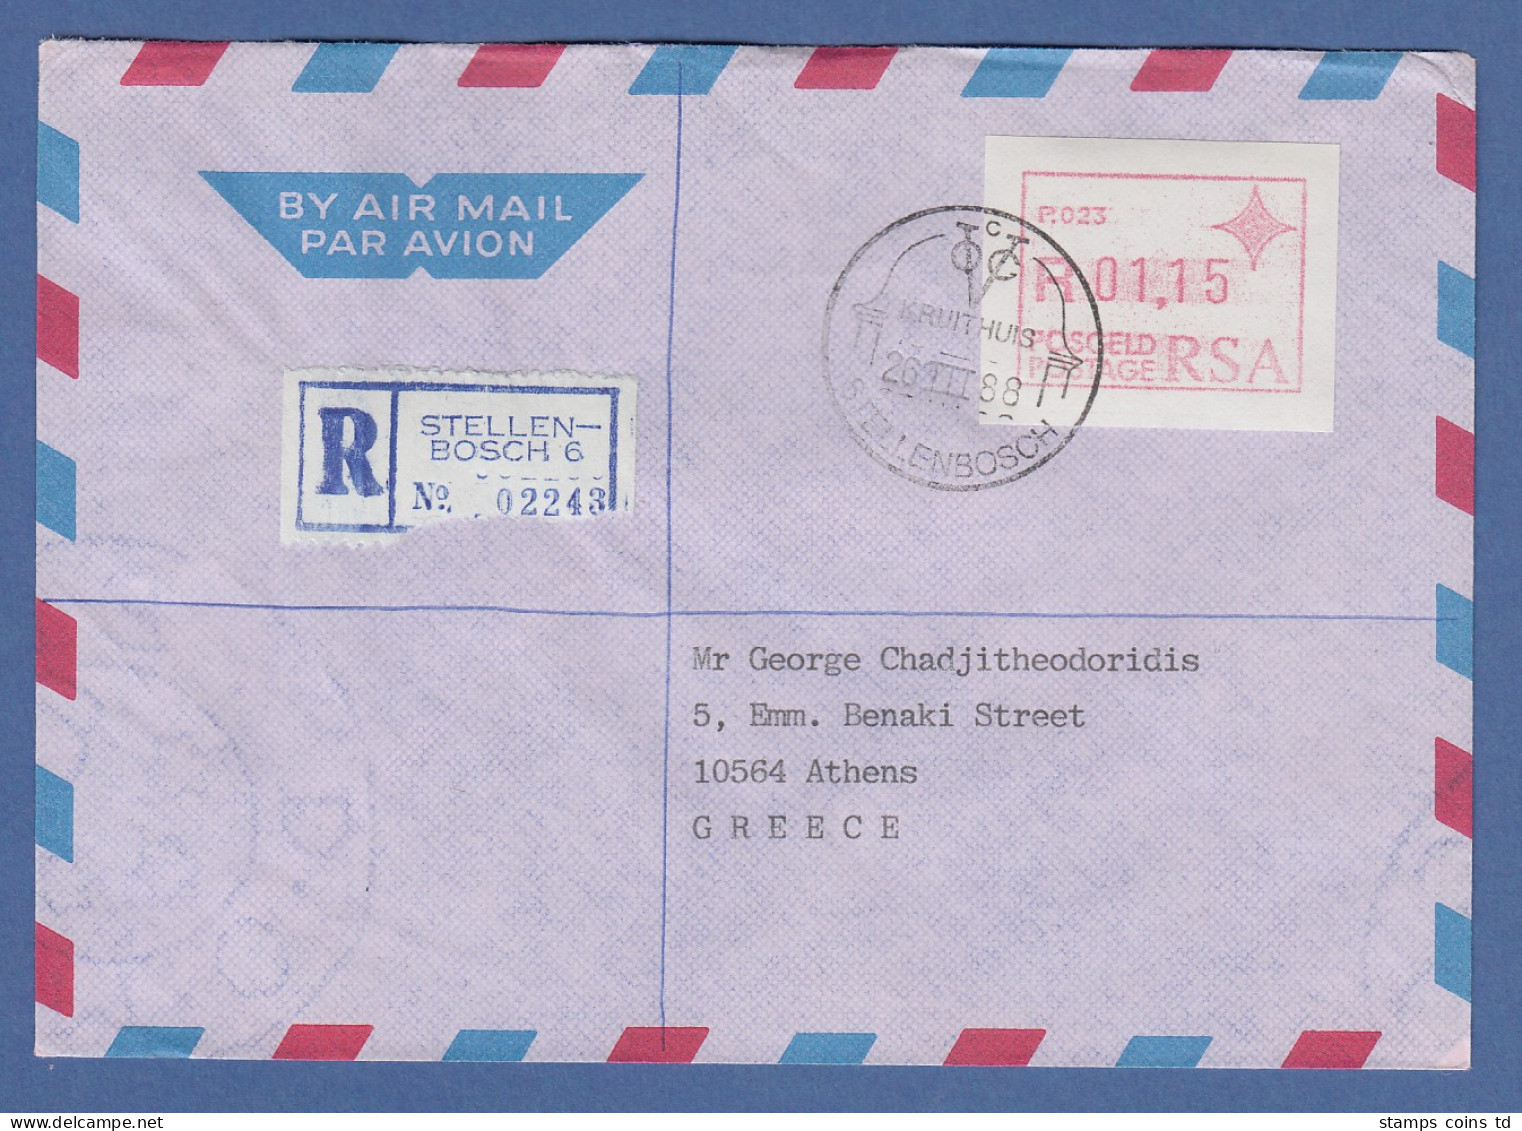 RSA Südafrika FRAMA-ATM Aus OA P.023 Stellenbosch 01,15 TP Auf Auslands-R-Brief - Frama Labels